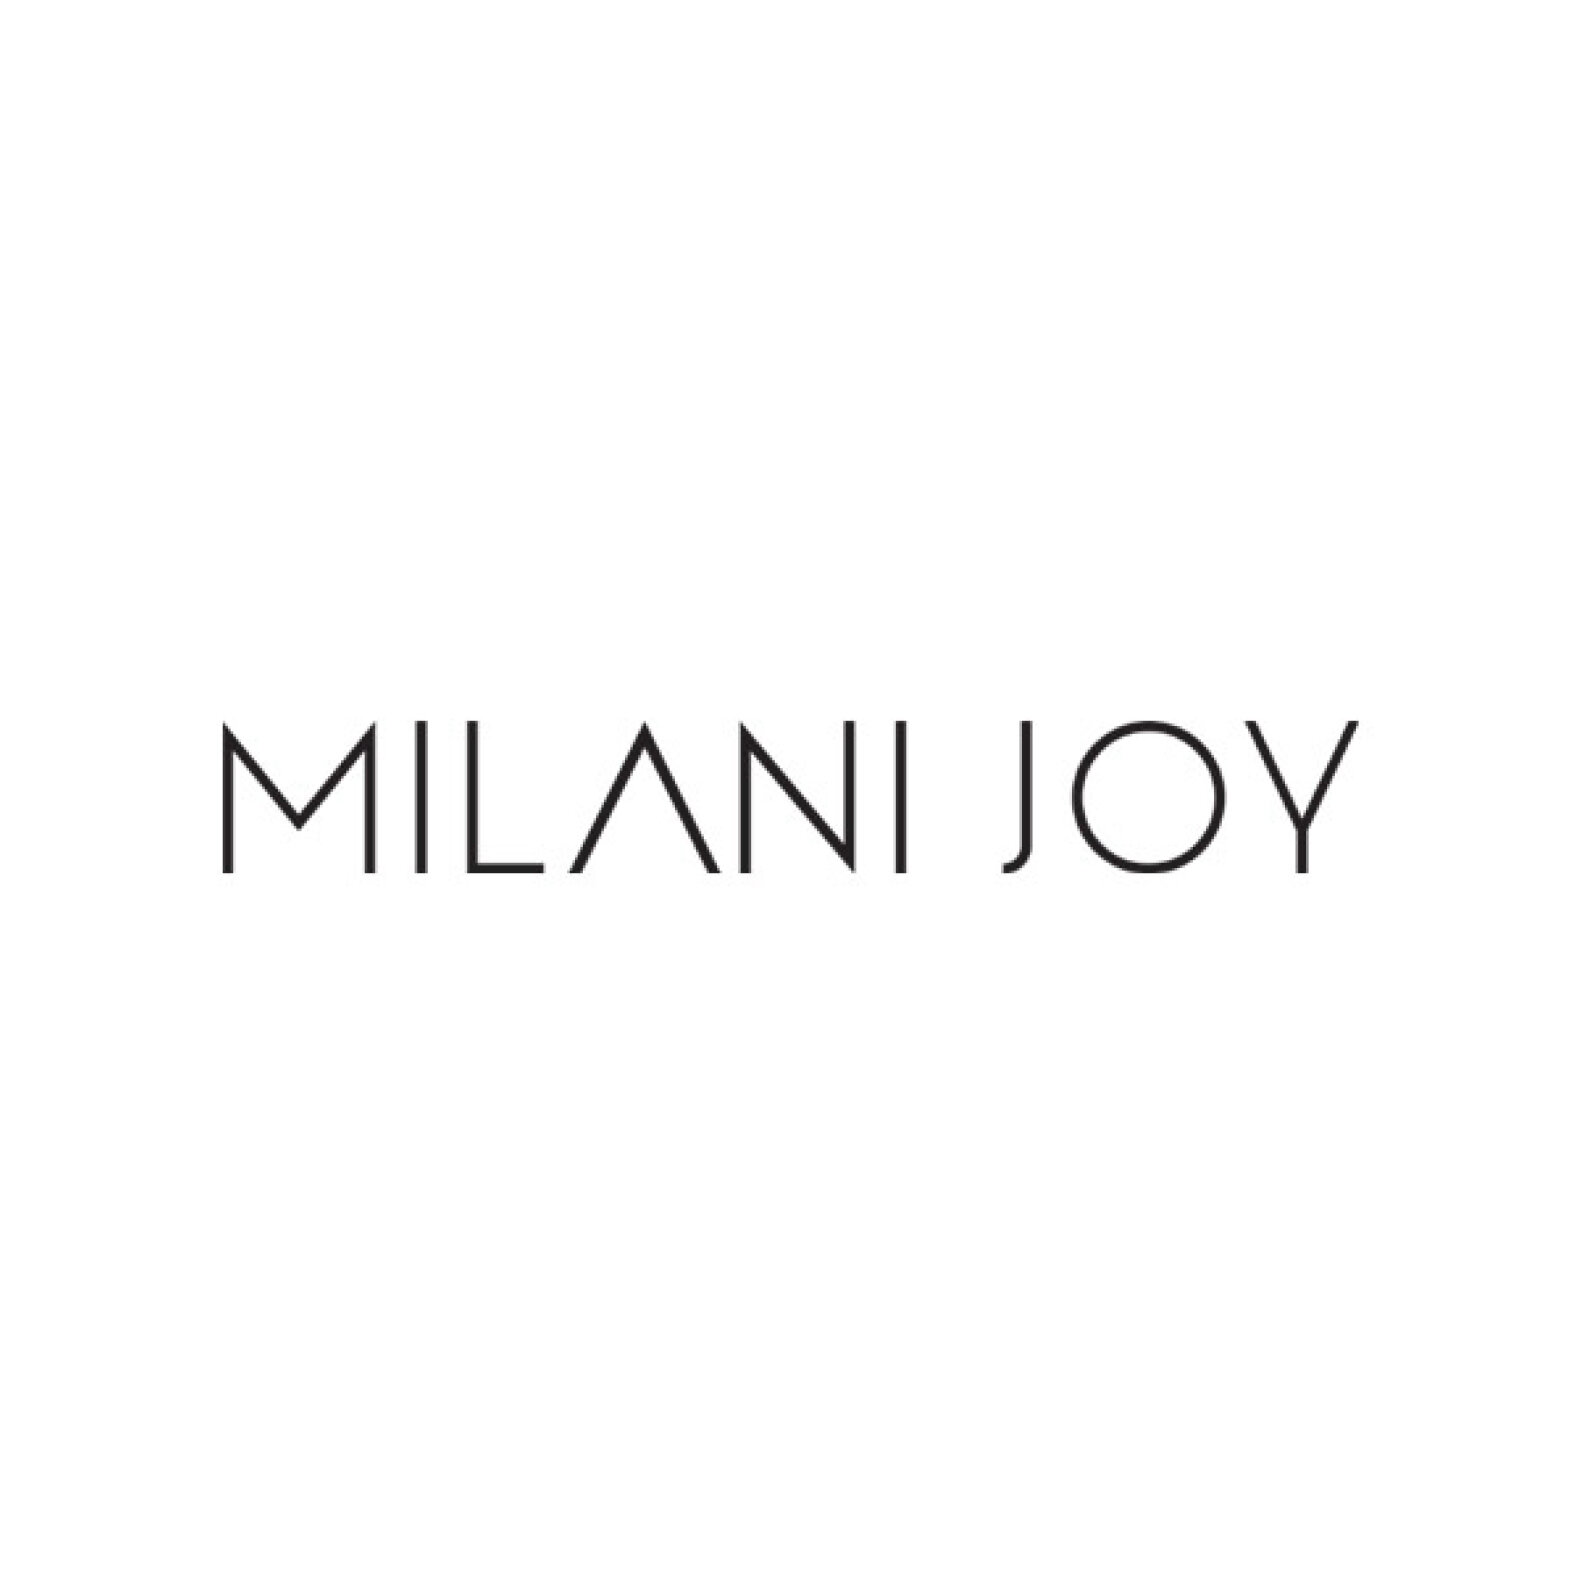 Jessica Abraham Milani Joy Logo.jpg